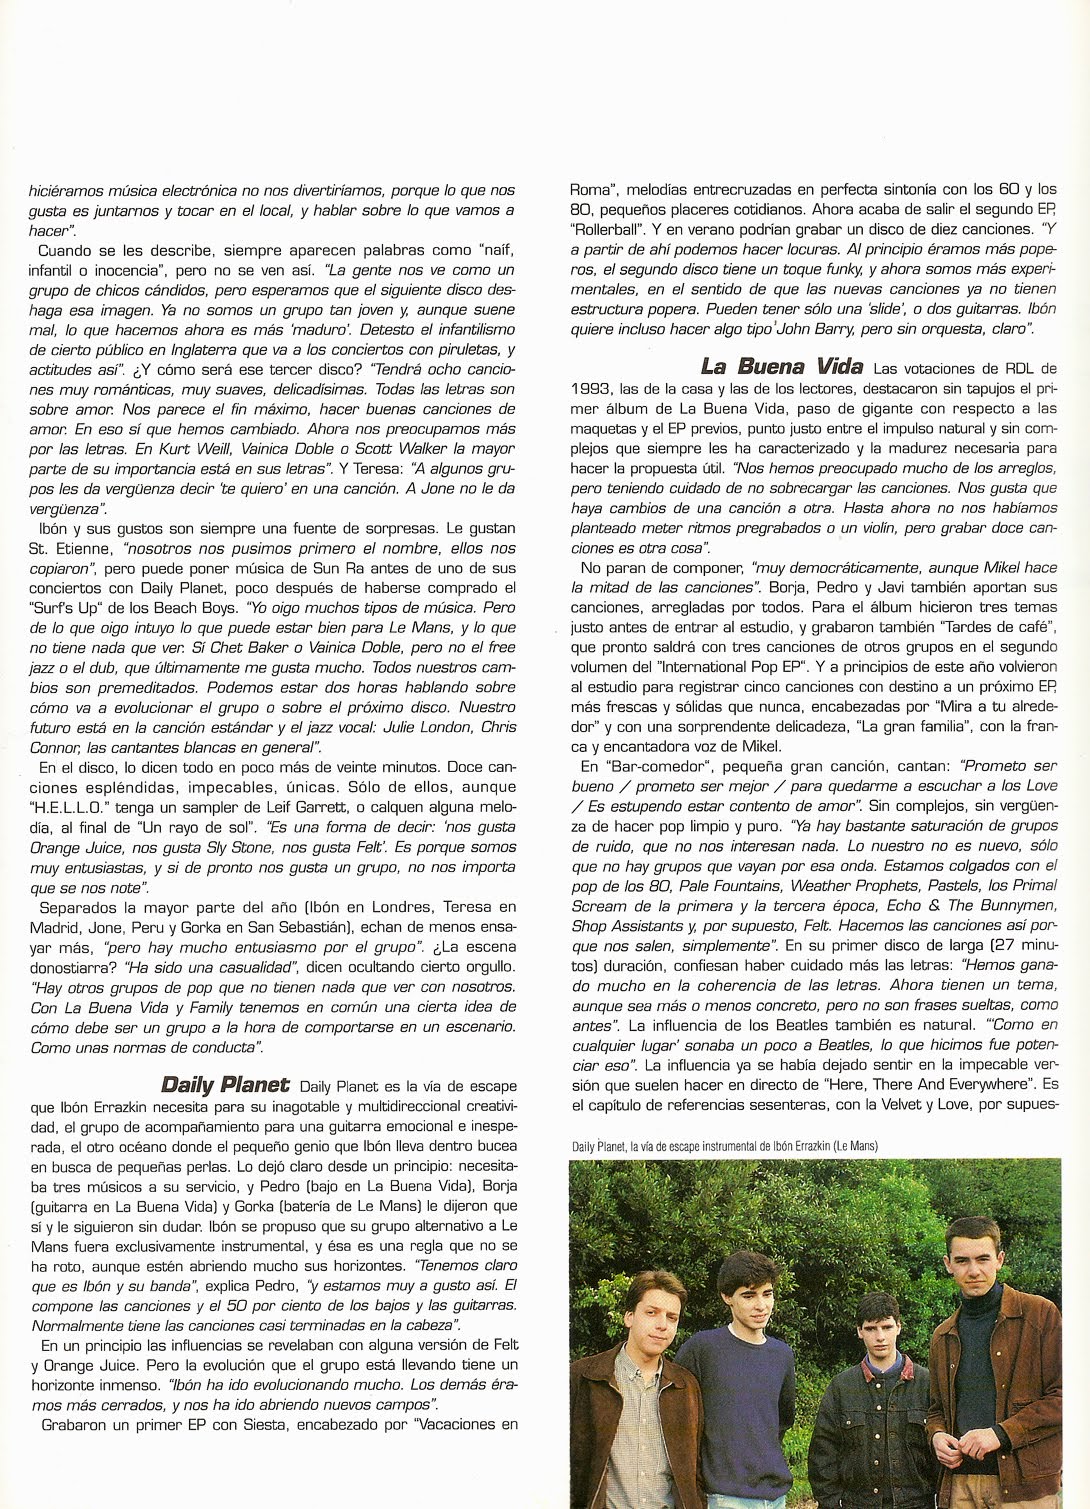 Donosti Sound - Family, La Buena Vida, Le Mans, Aventuras de Kirlian Informe-donosti-sound-rockdelux-108-mayo-1994-2